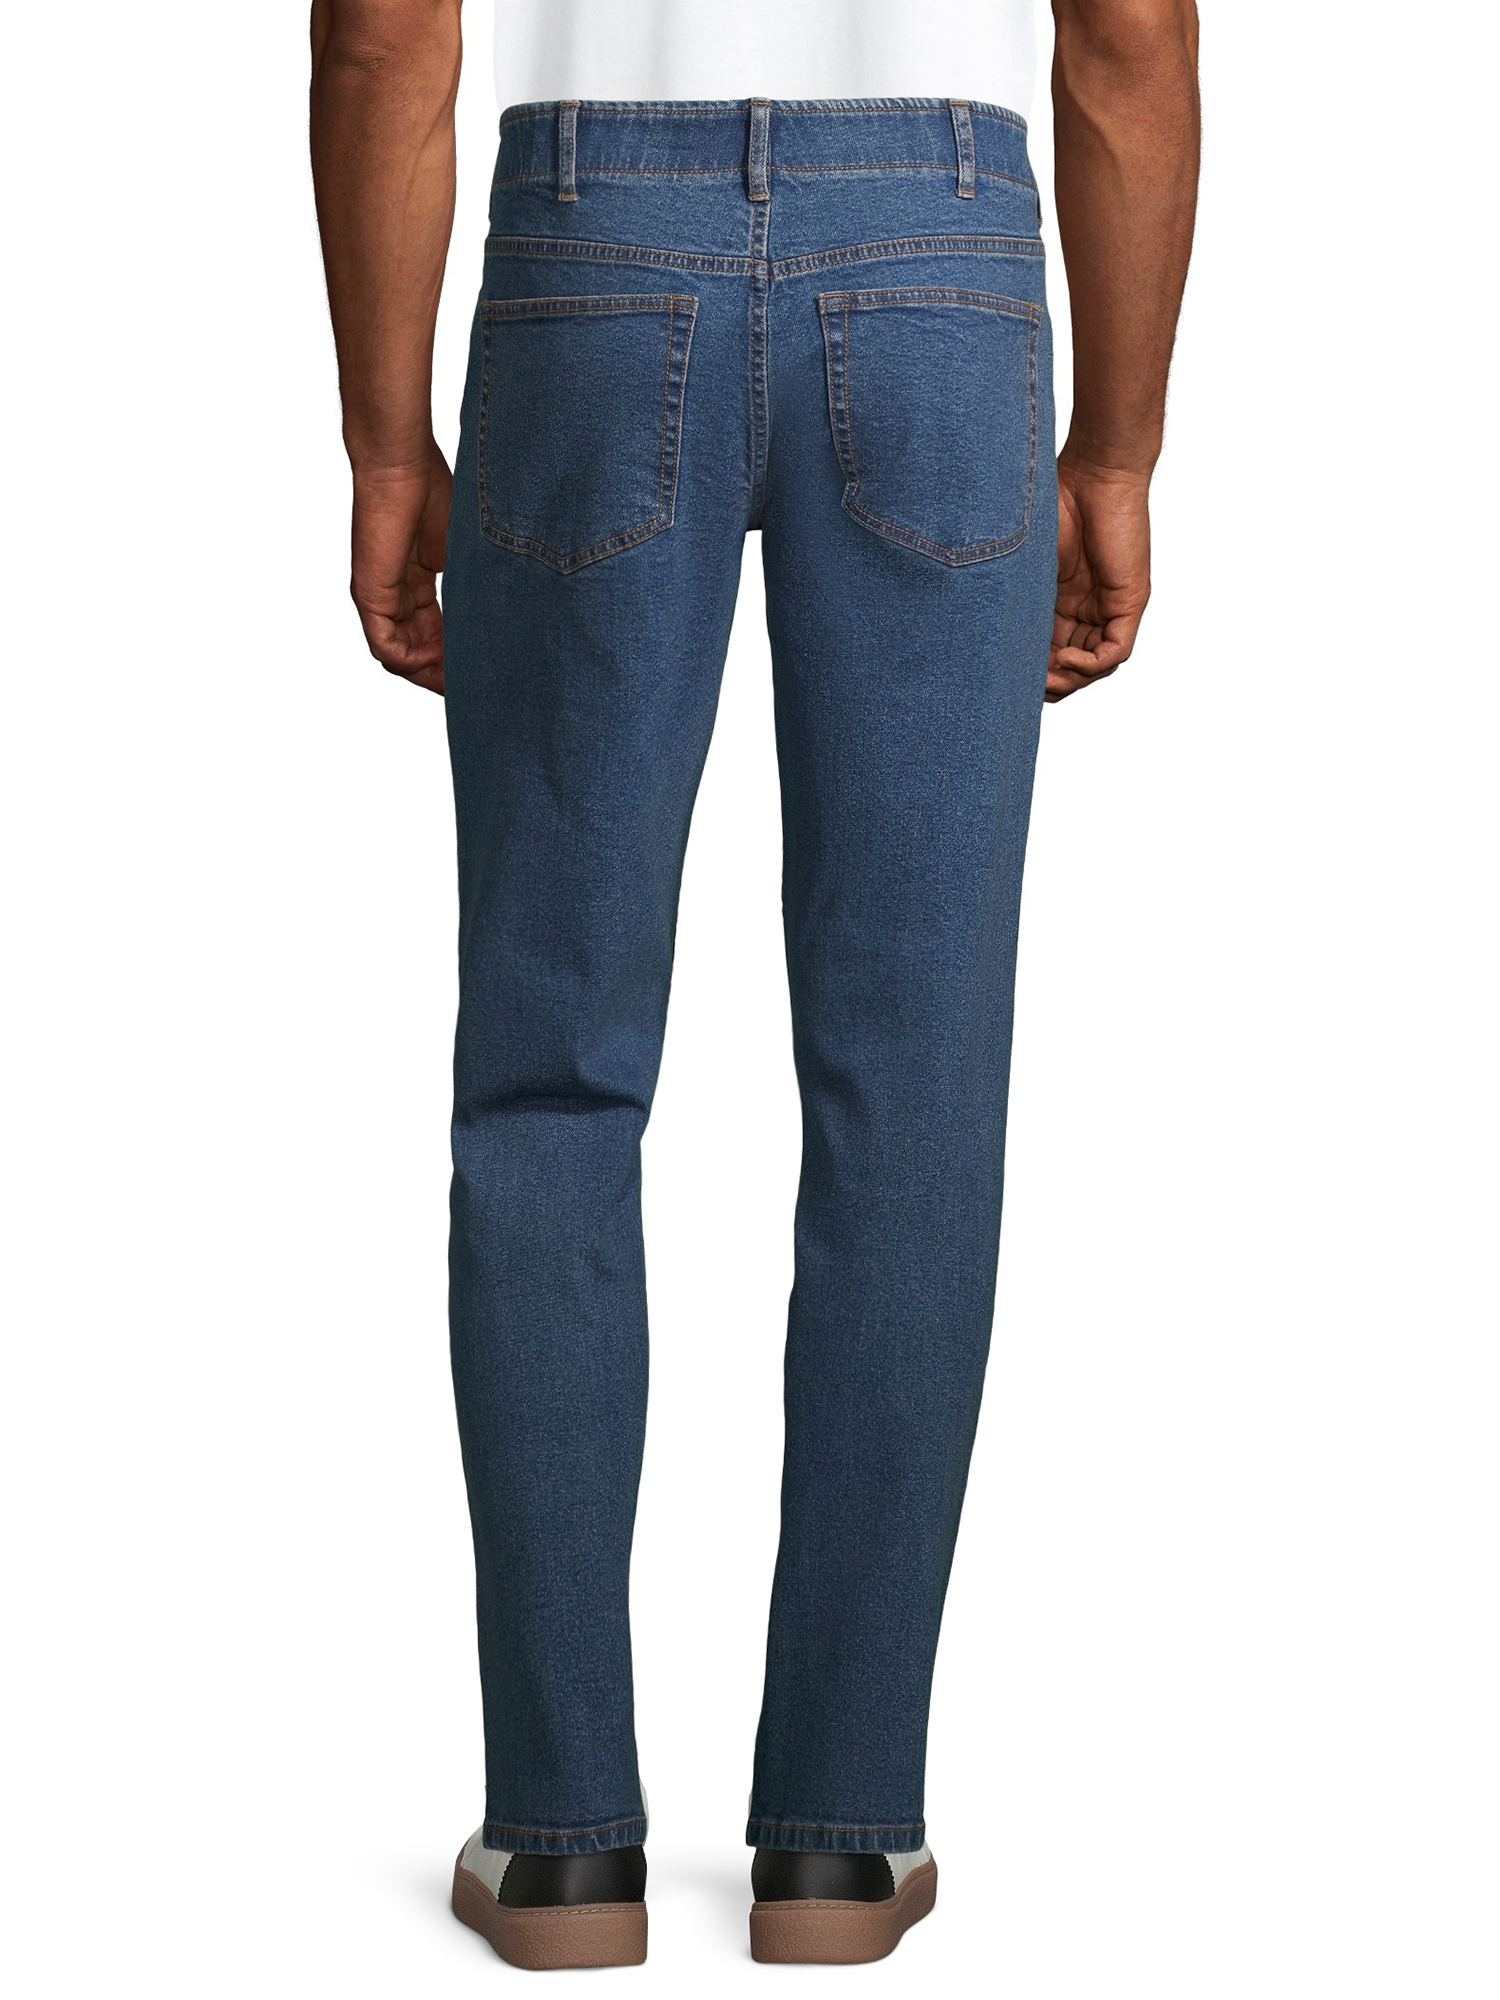 Hollywood Jeans Men's Active Flex Denim Straight Fit Jeans - image 5 of 6